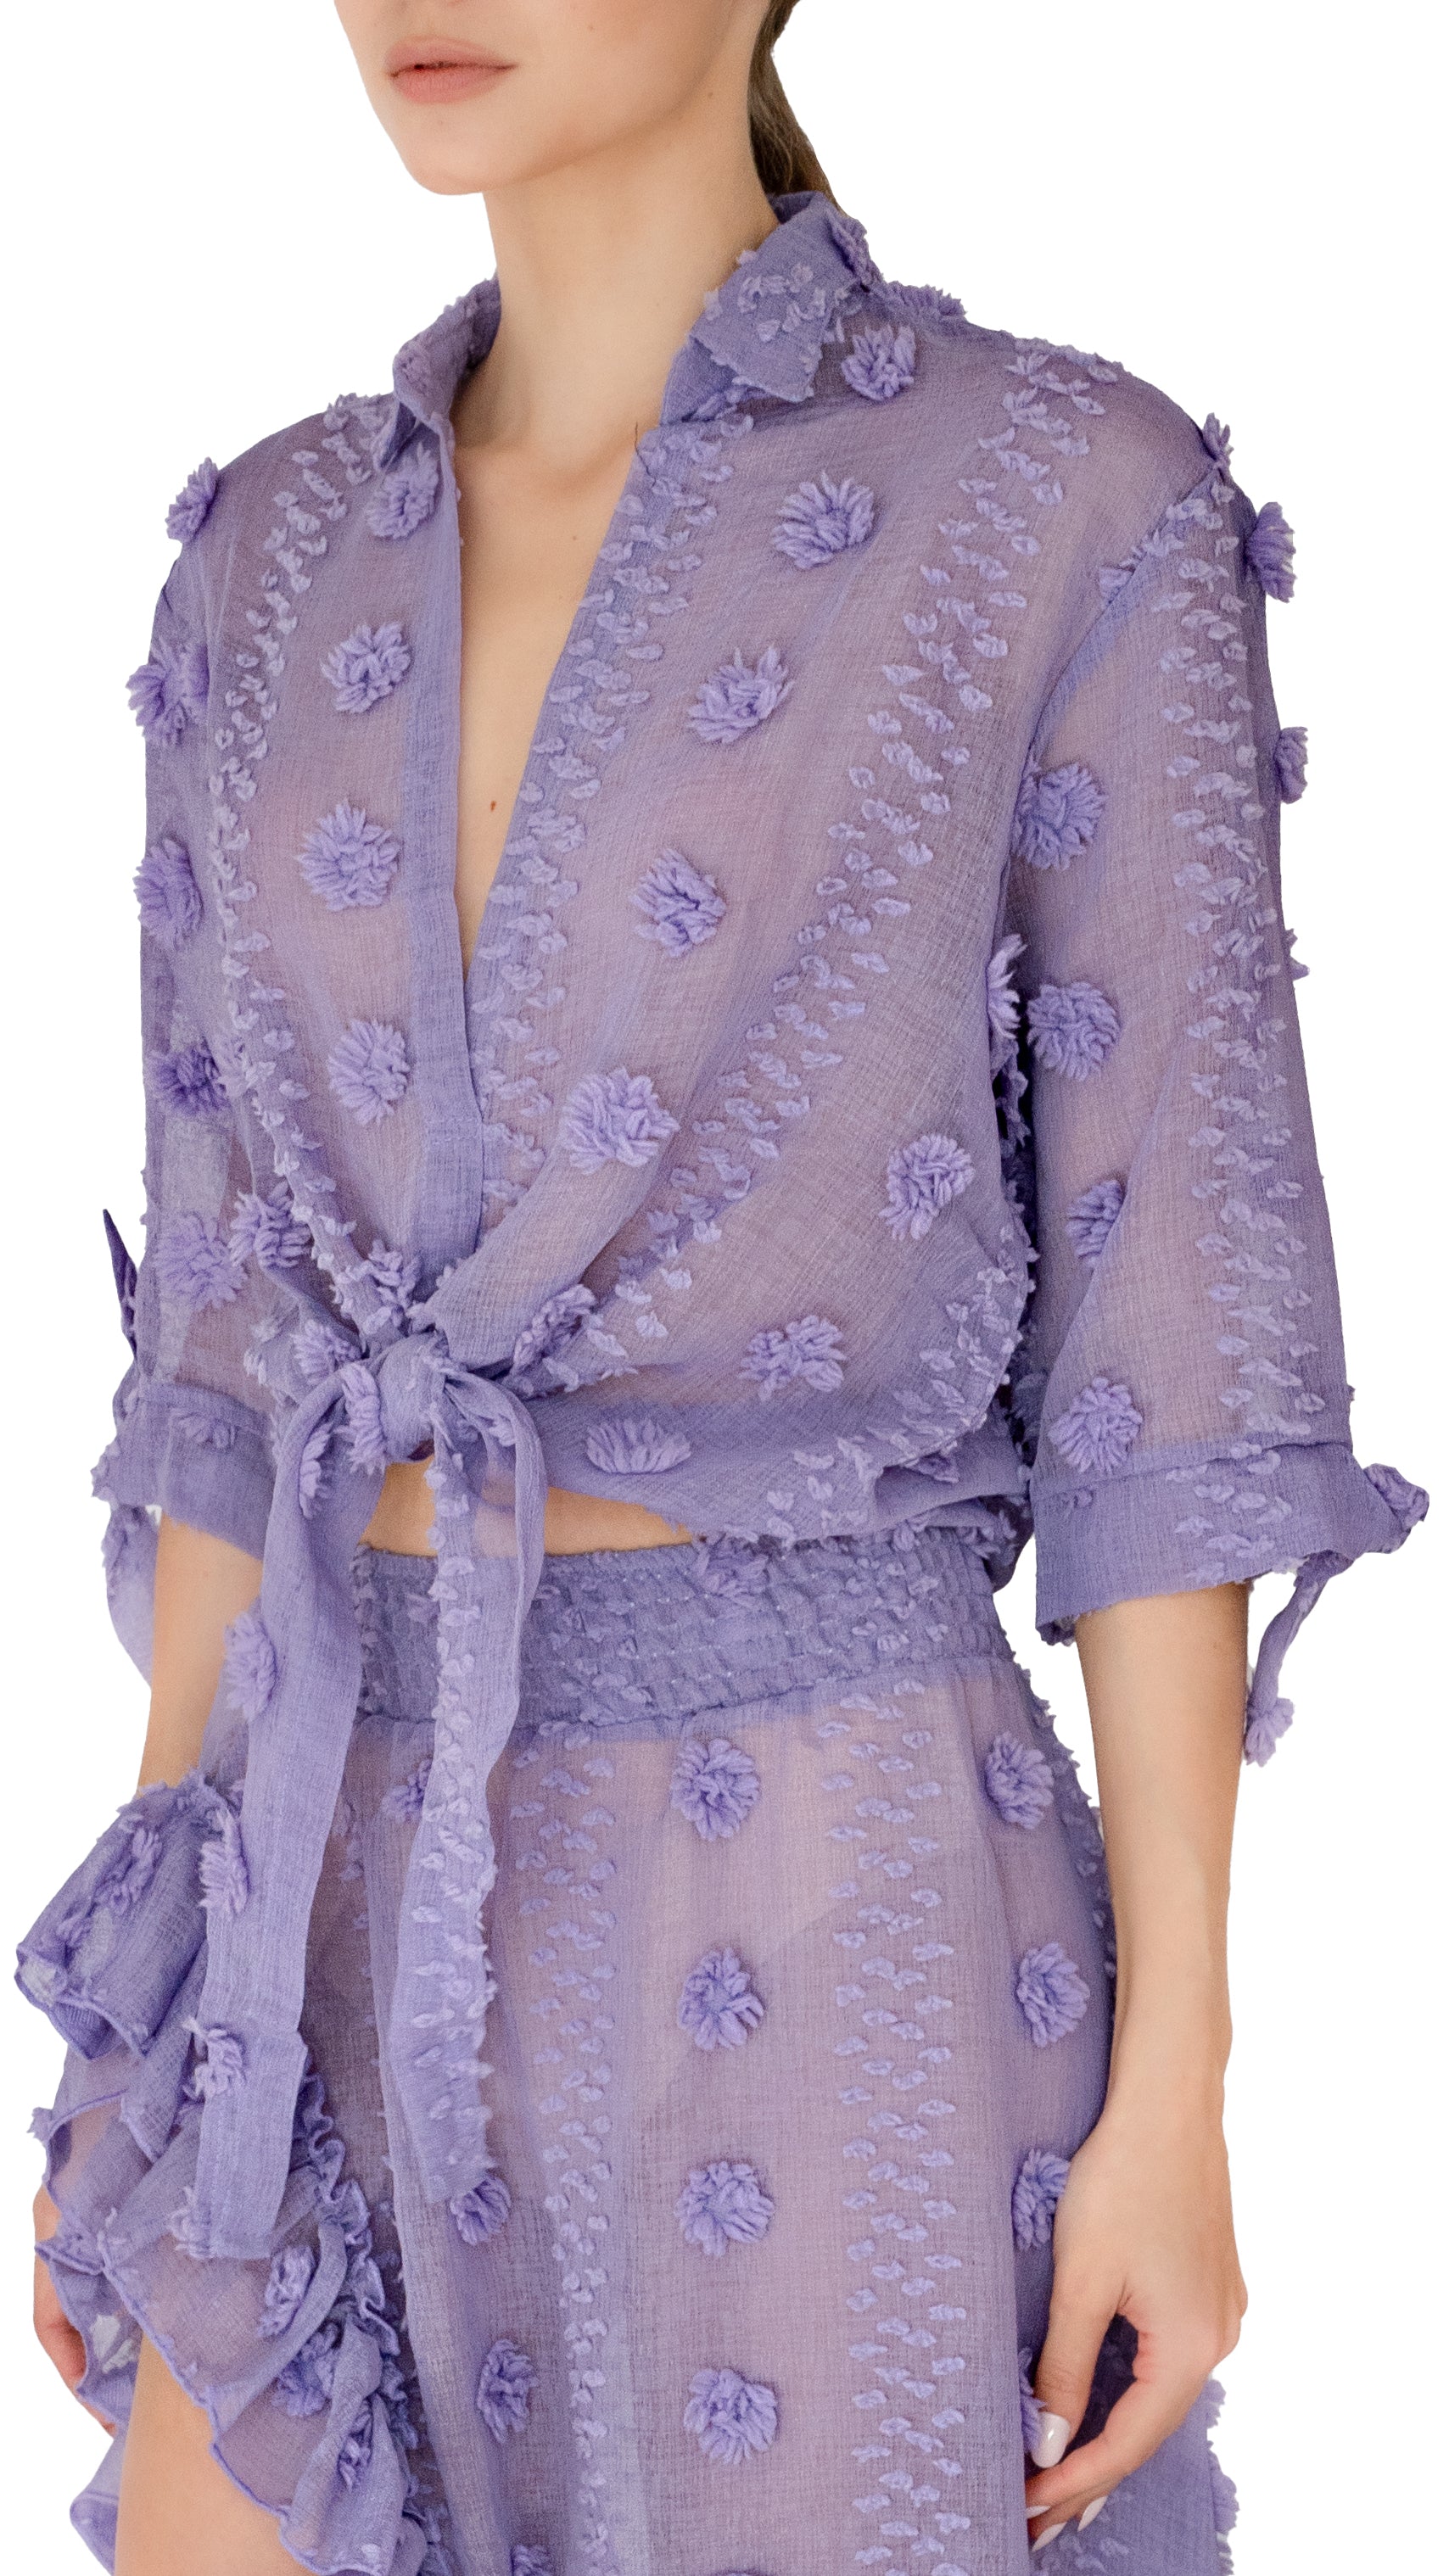 Pop St Barths Mika Shirt Short sleeve top in lilac